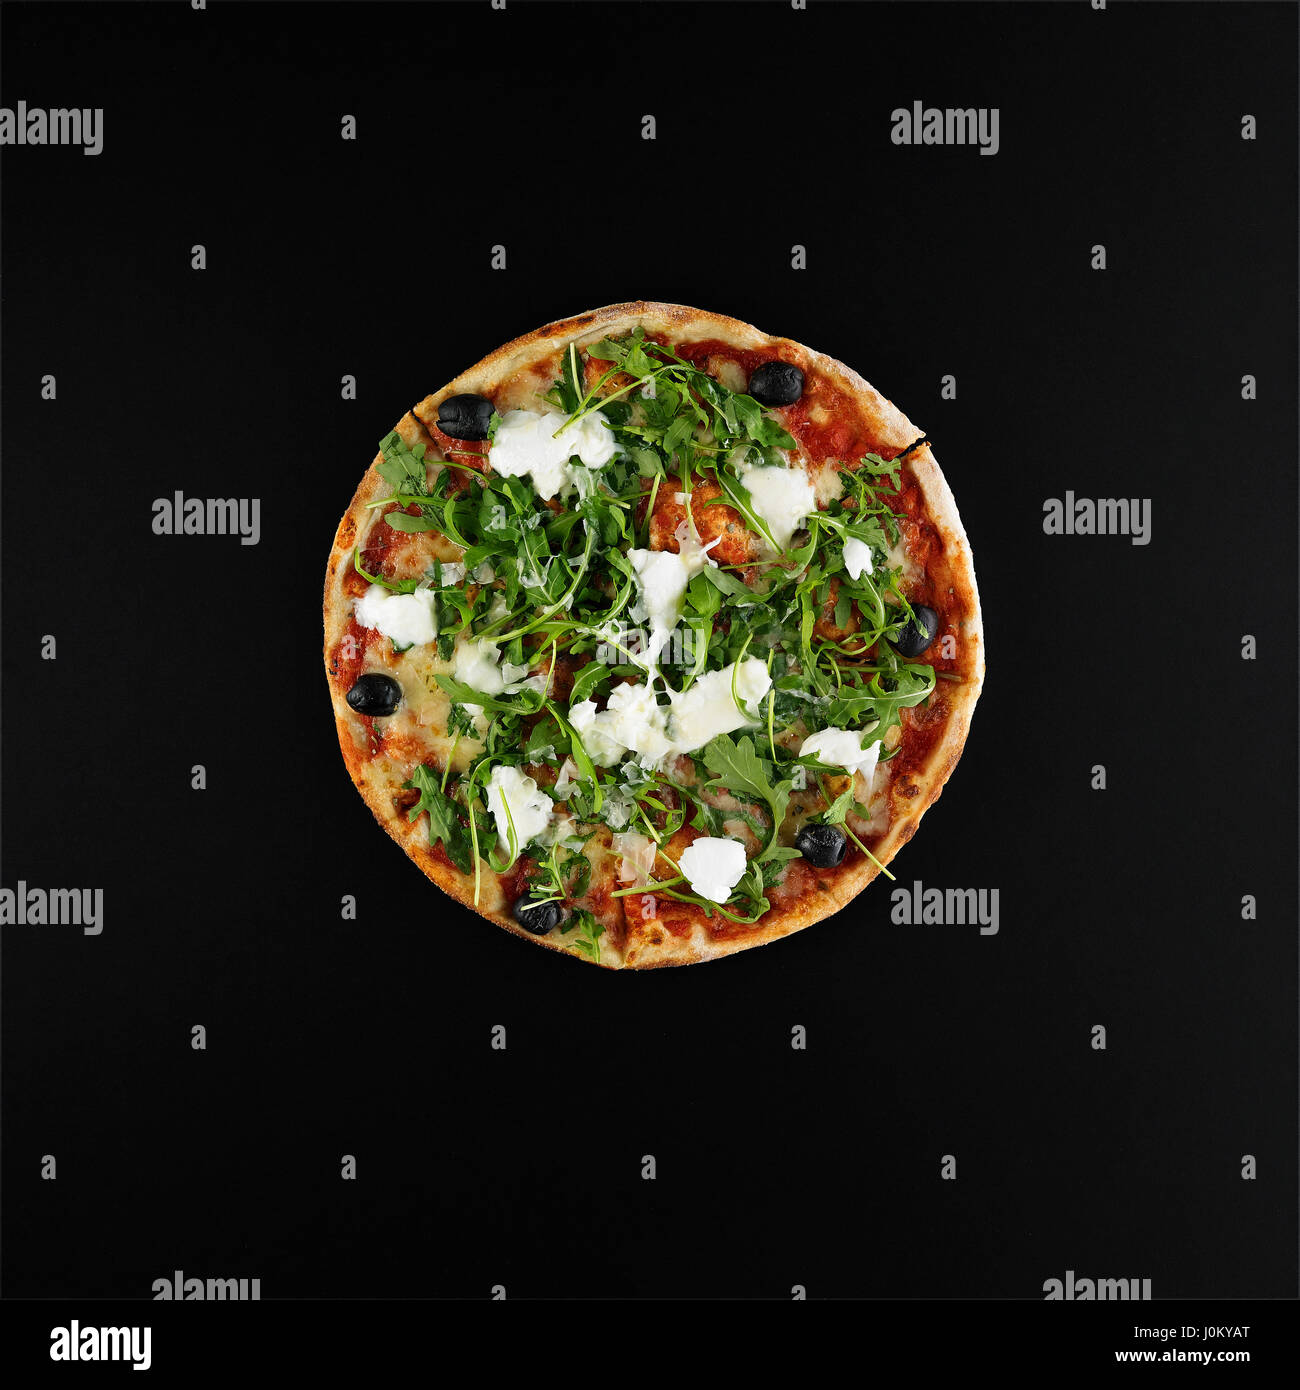 Pizza on Black background Stock Photo - Alamy